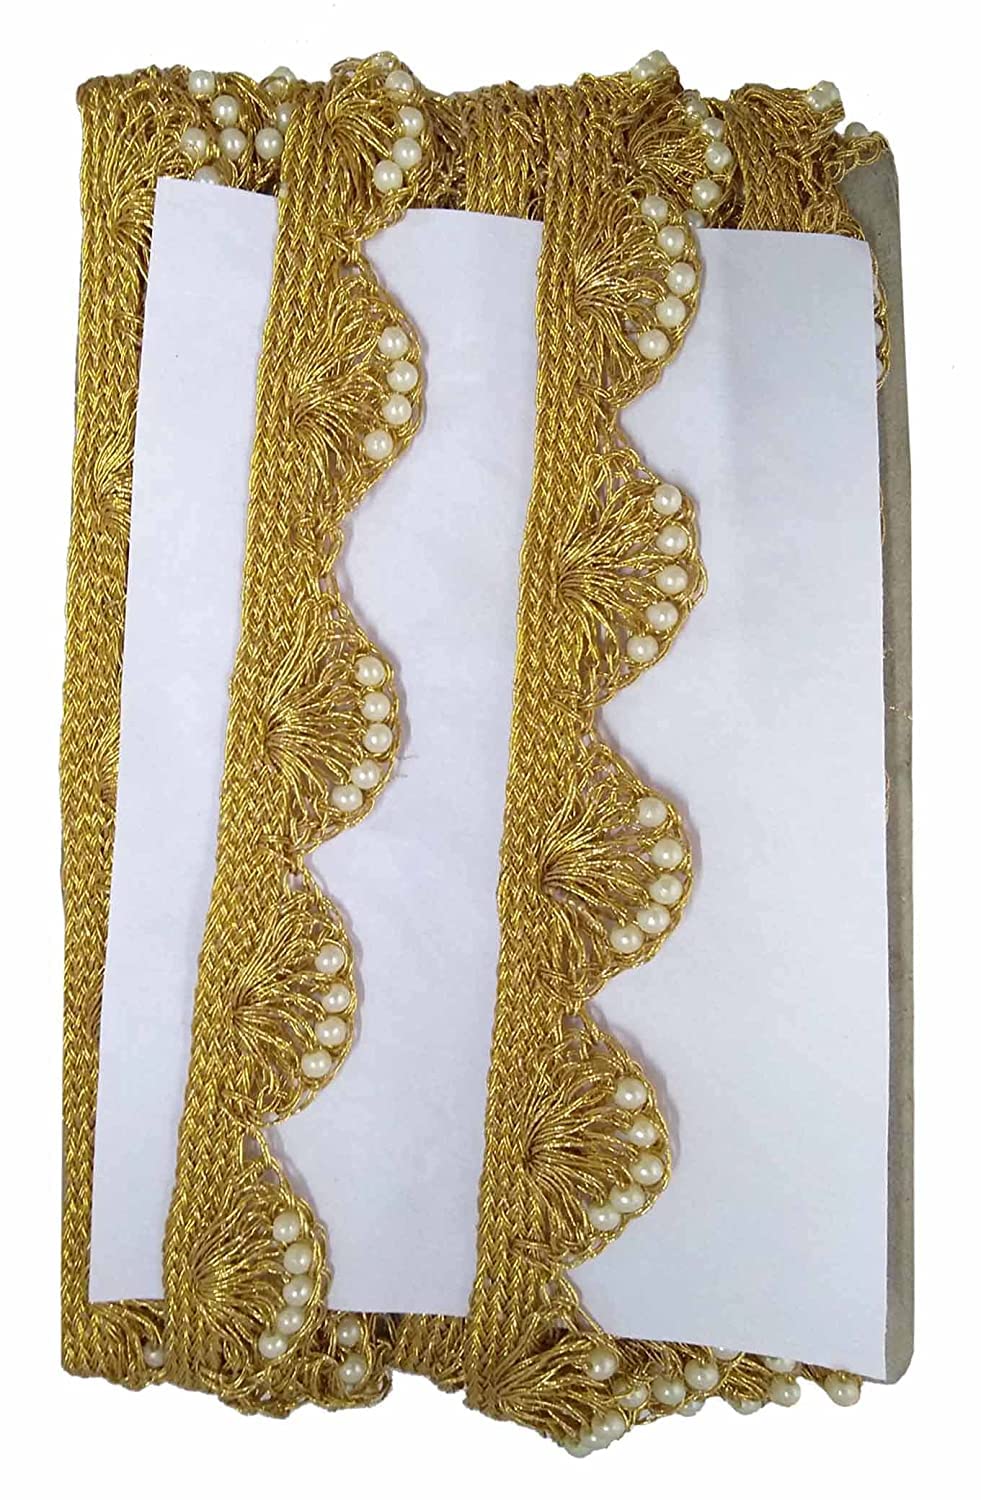 Choudhary Gota Moti Pearl Beads Pankh Border Lace for Bridal Dresses, Sarees, Lehengas, Decoration, Bag and Designing Embellishment Crafts (8.5 Mtr) (Antic Gold)